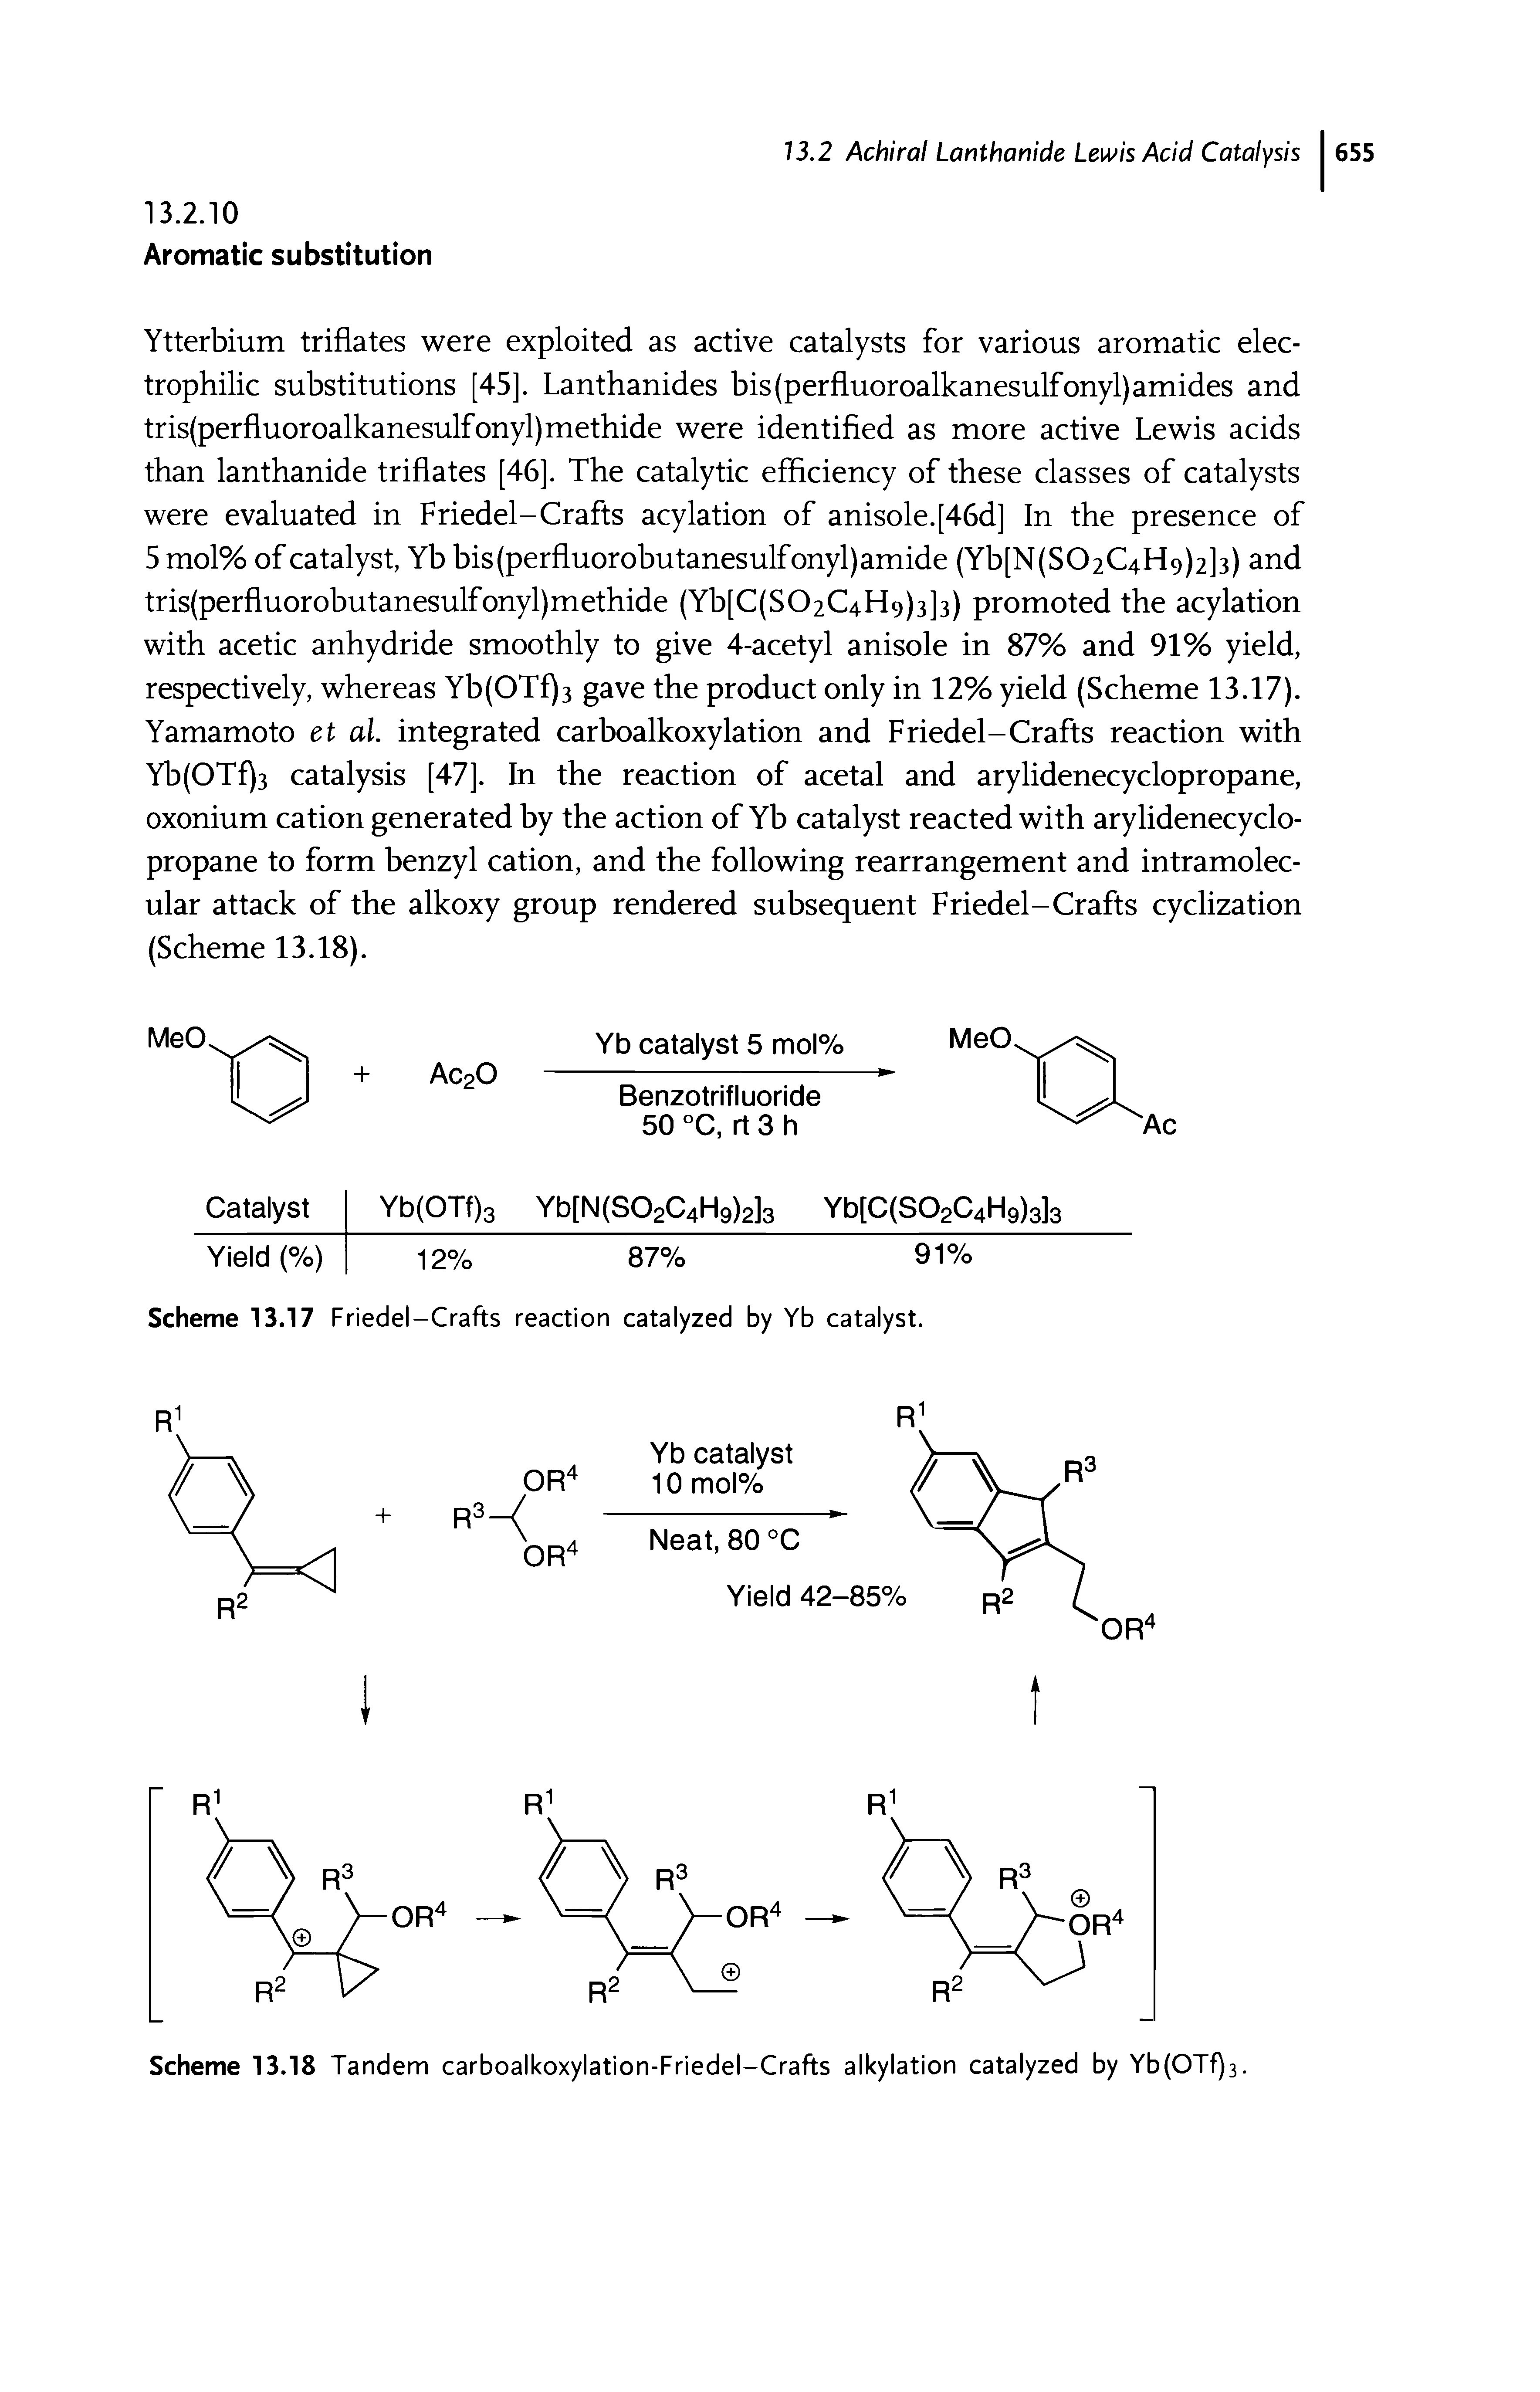 Scheme 13.18 Tandem carboalkoxylation-Friedel-Crafts alkylation catalyzed by Yb(OTf)3.